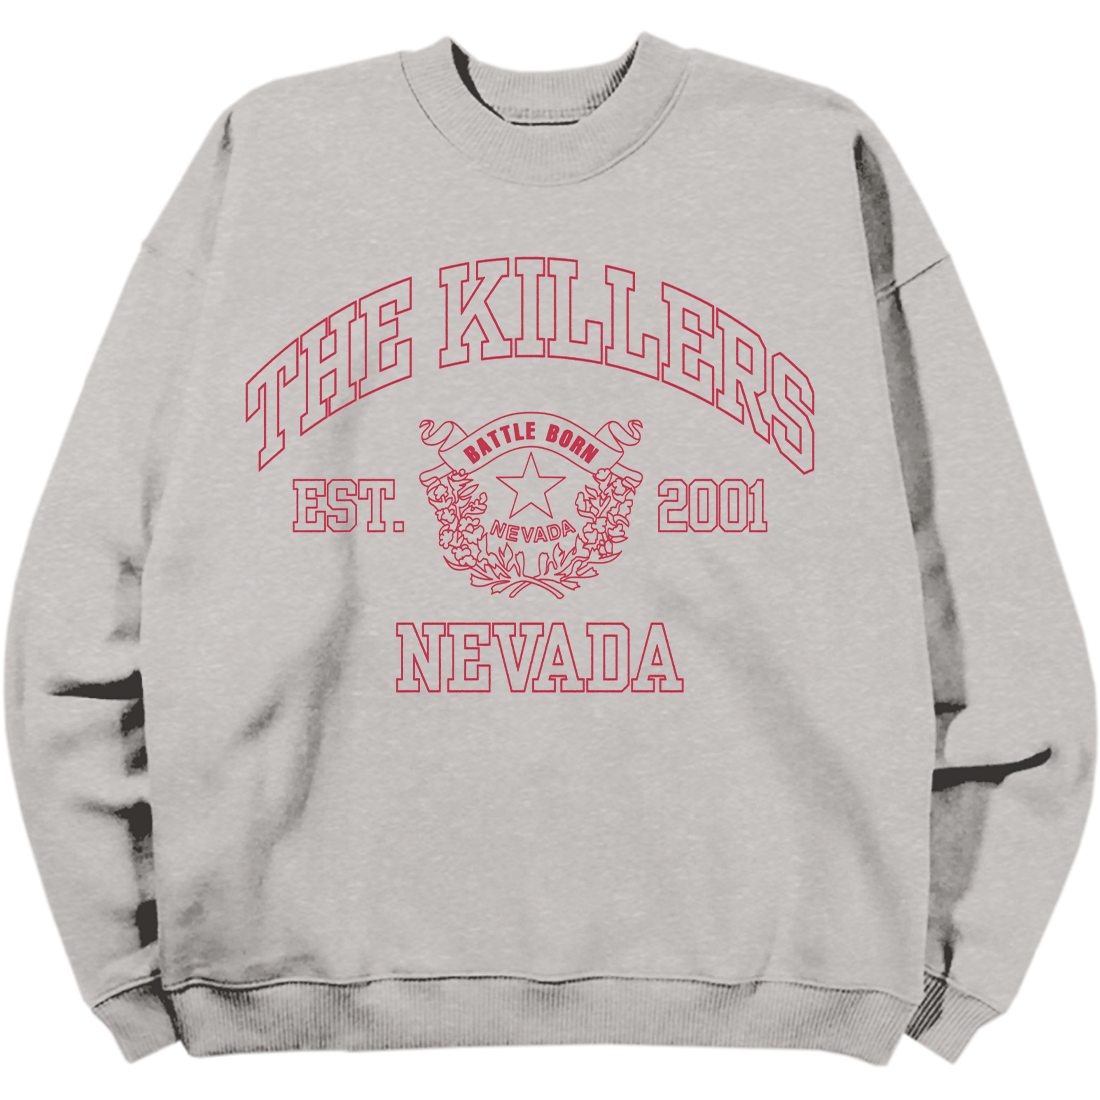 The Killers - Nevada Crewneck